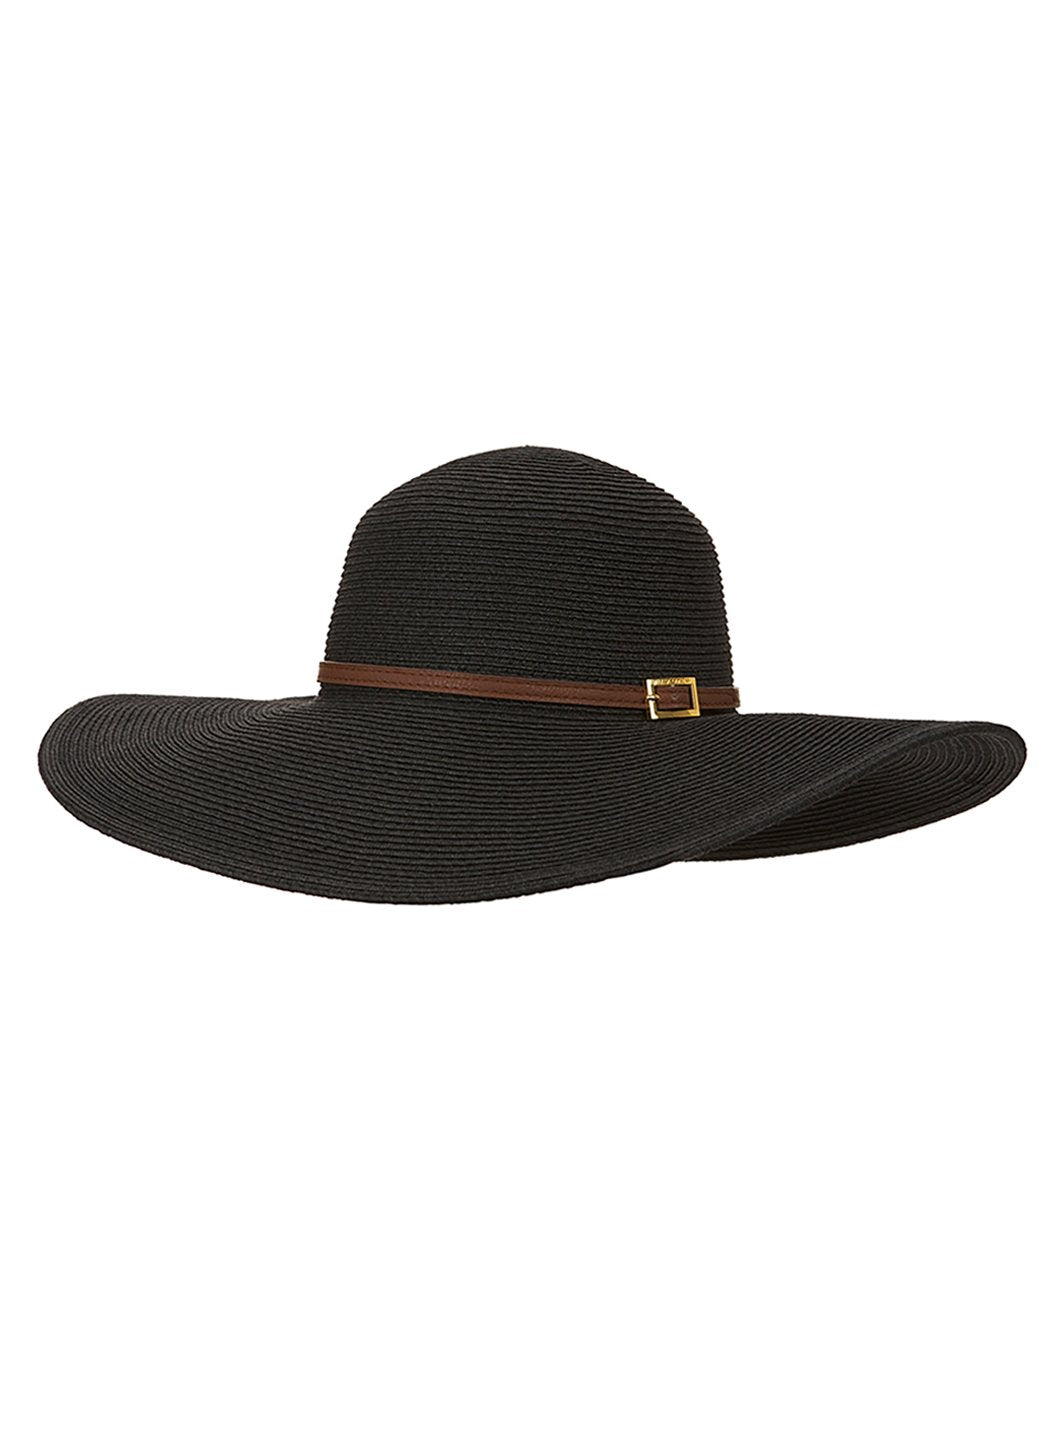 jemima black wide brimmed hat cutout